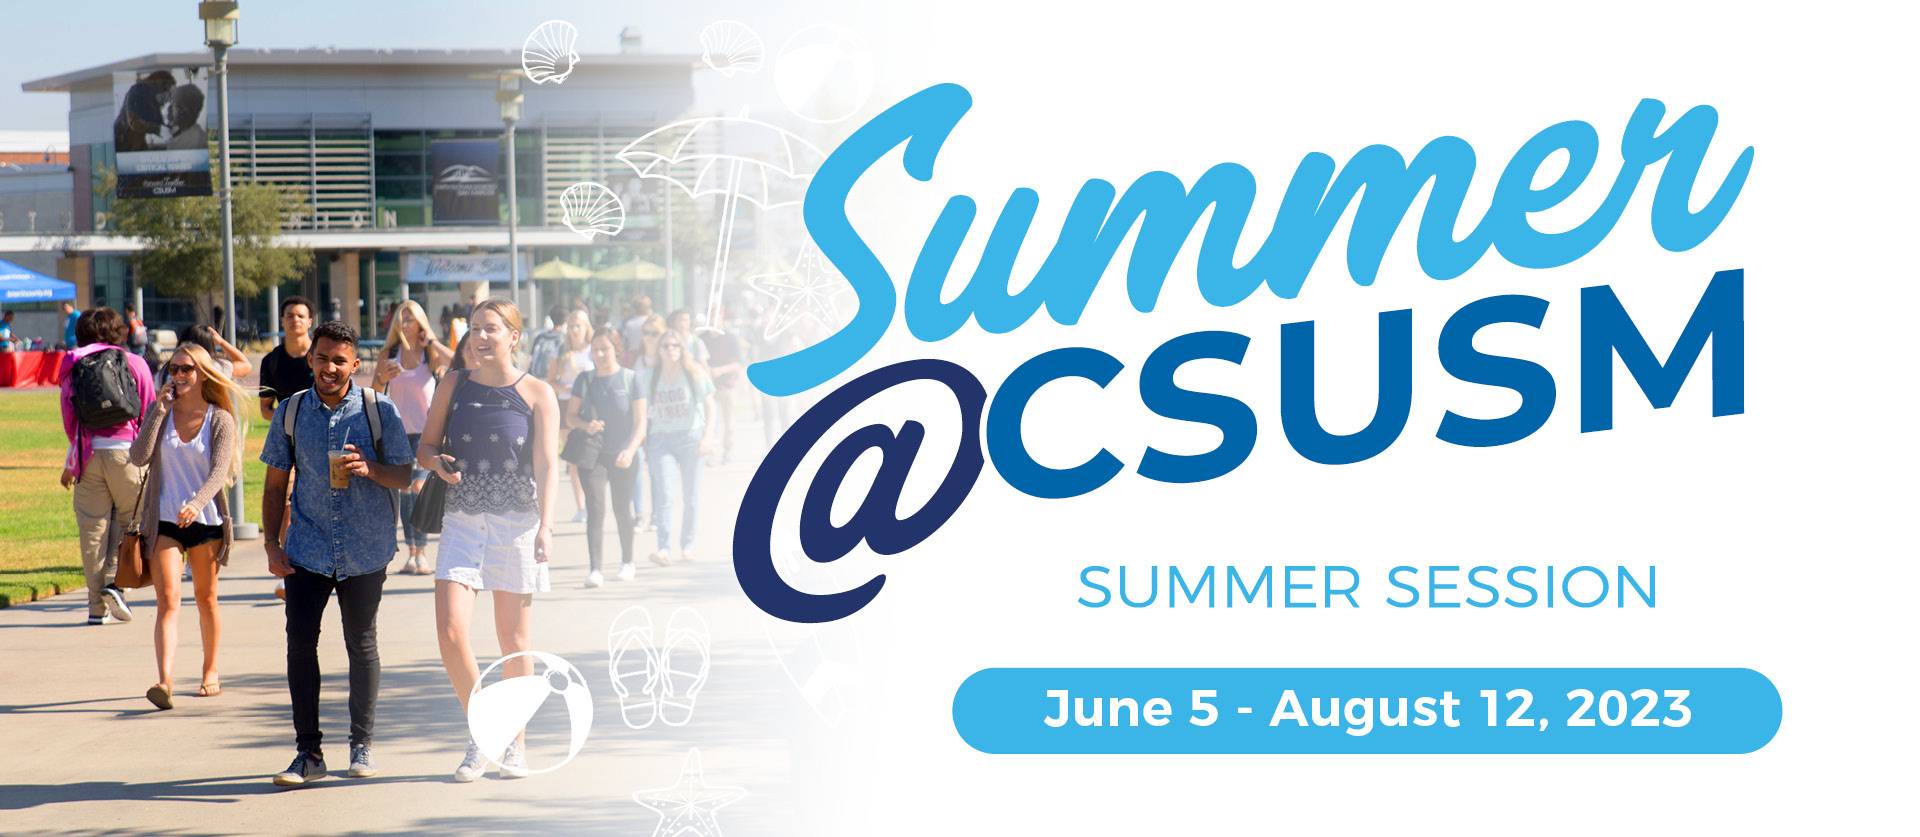 Summer Term CSUSM